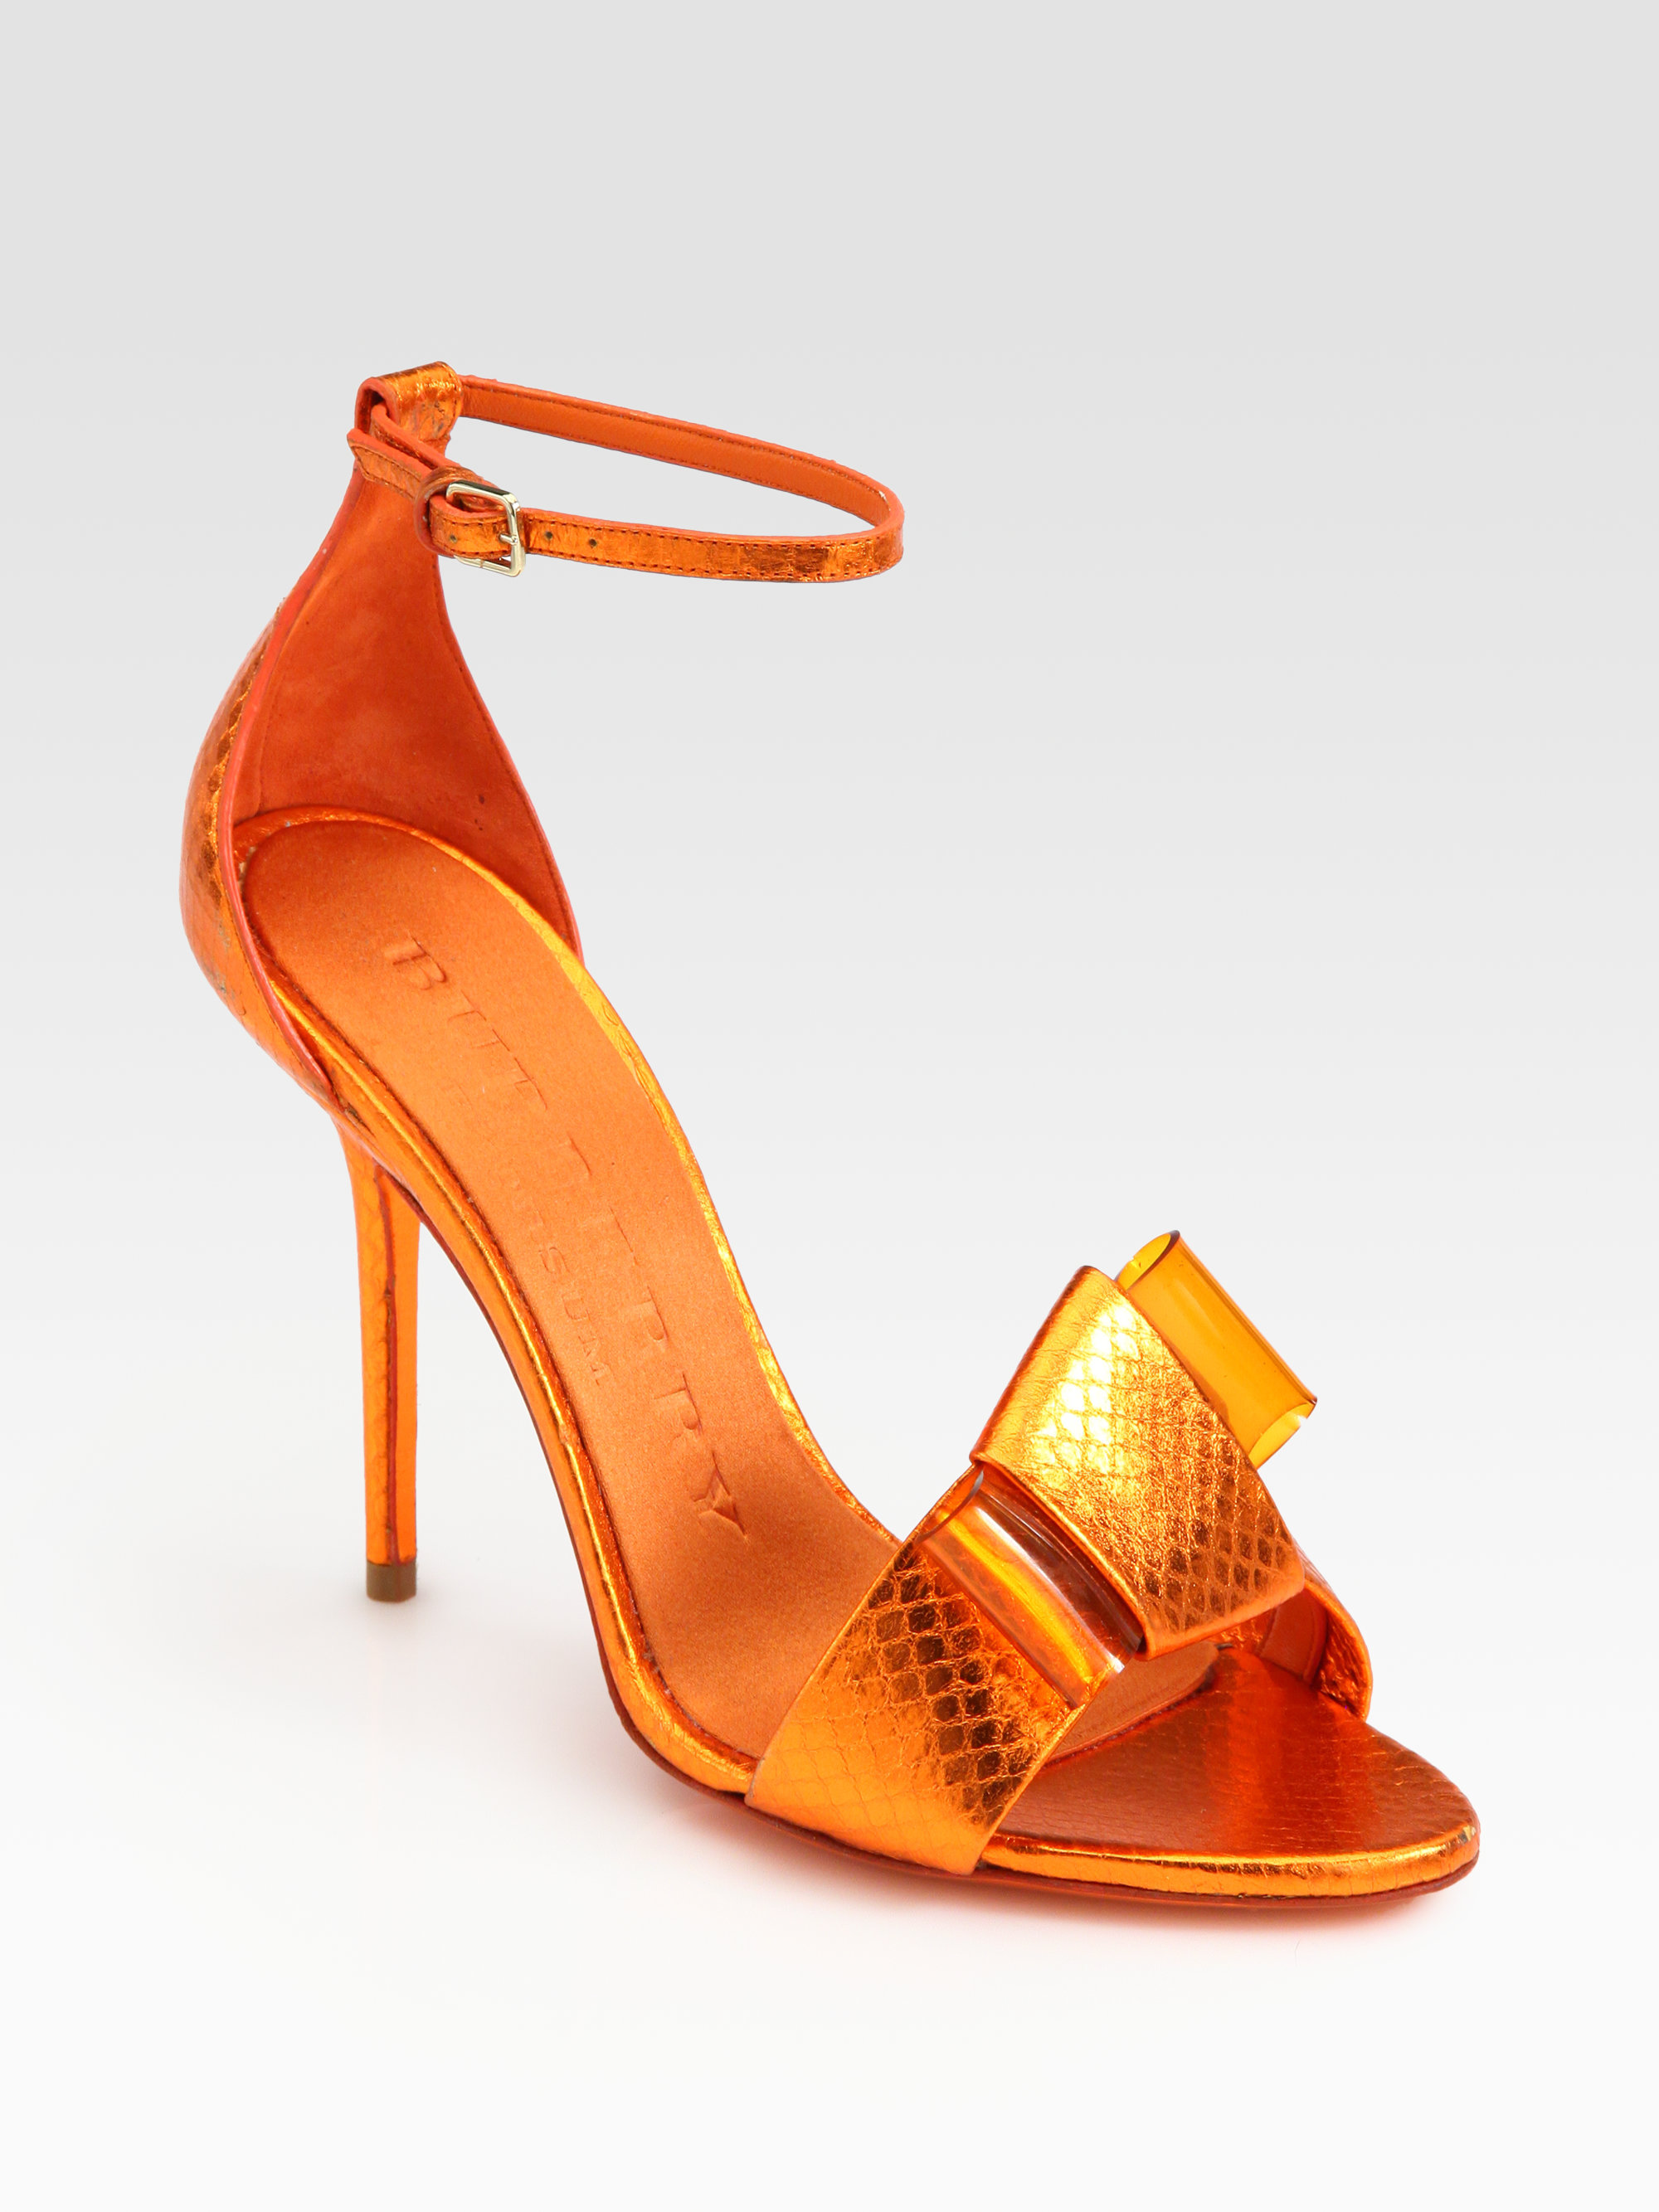 burberry sandals orange